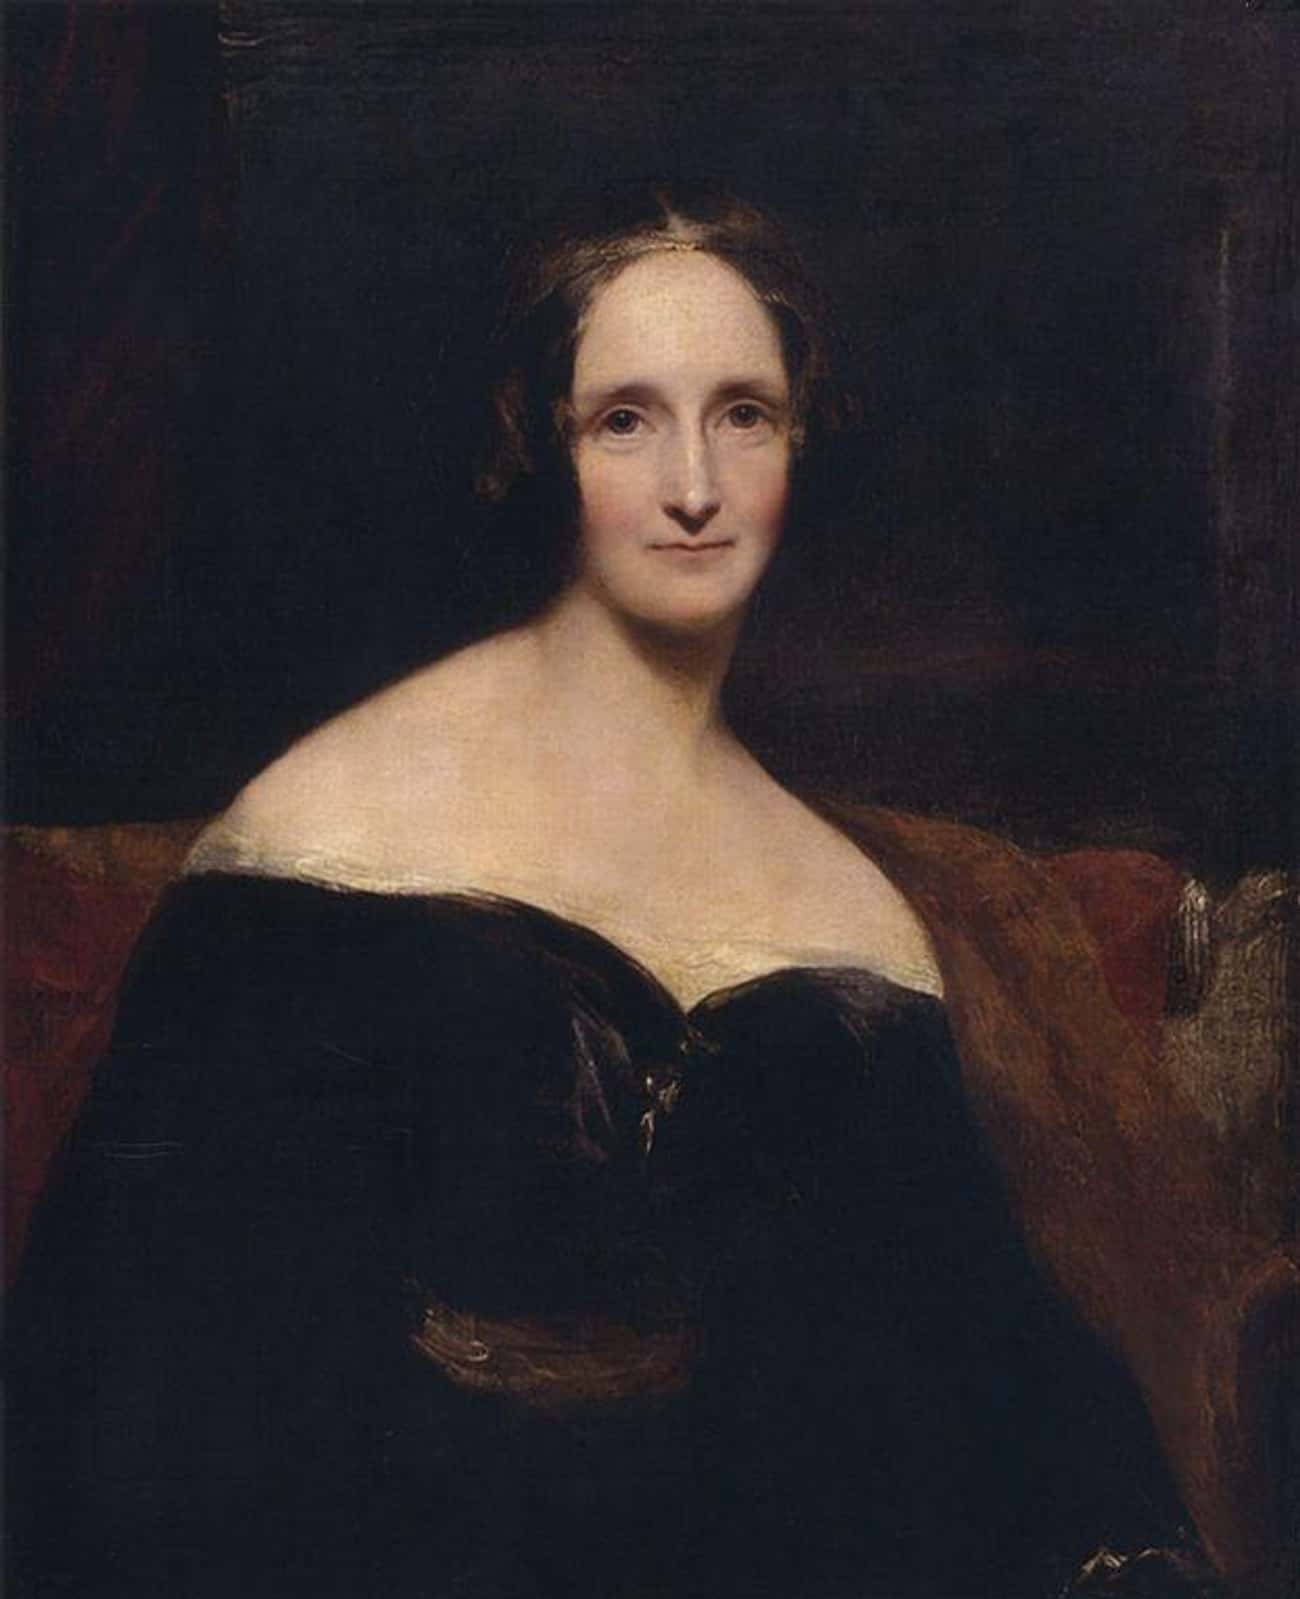 Mary Shelley Predicted Transplants